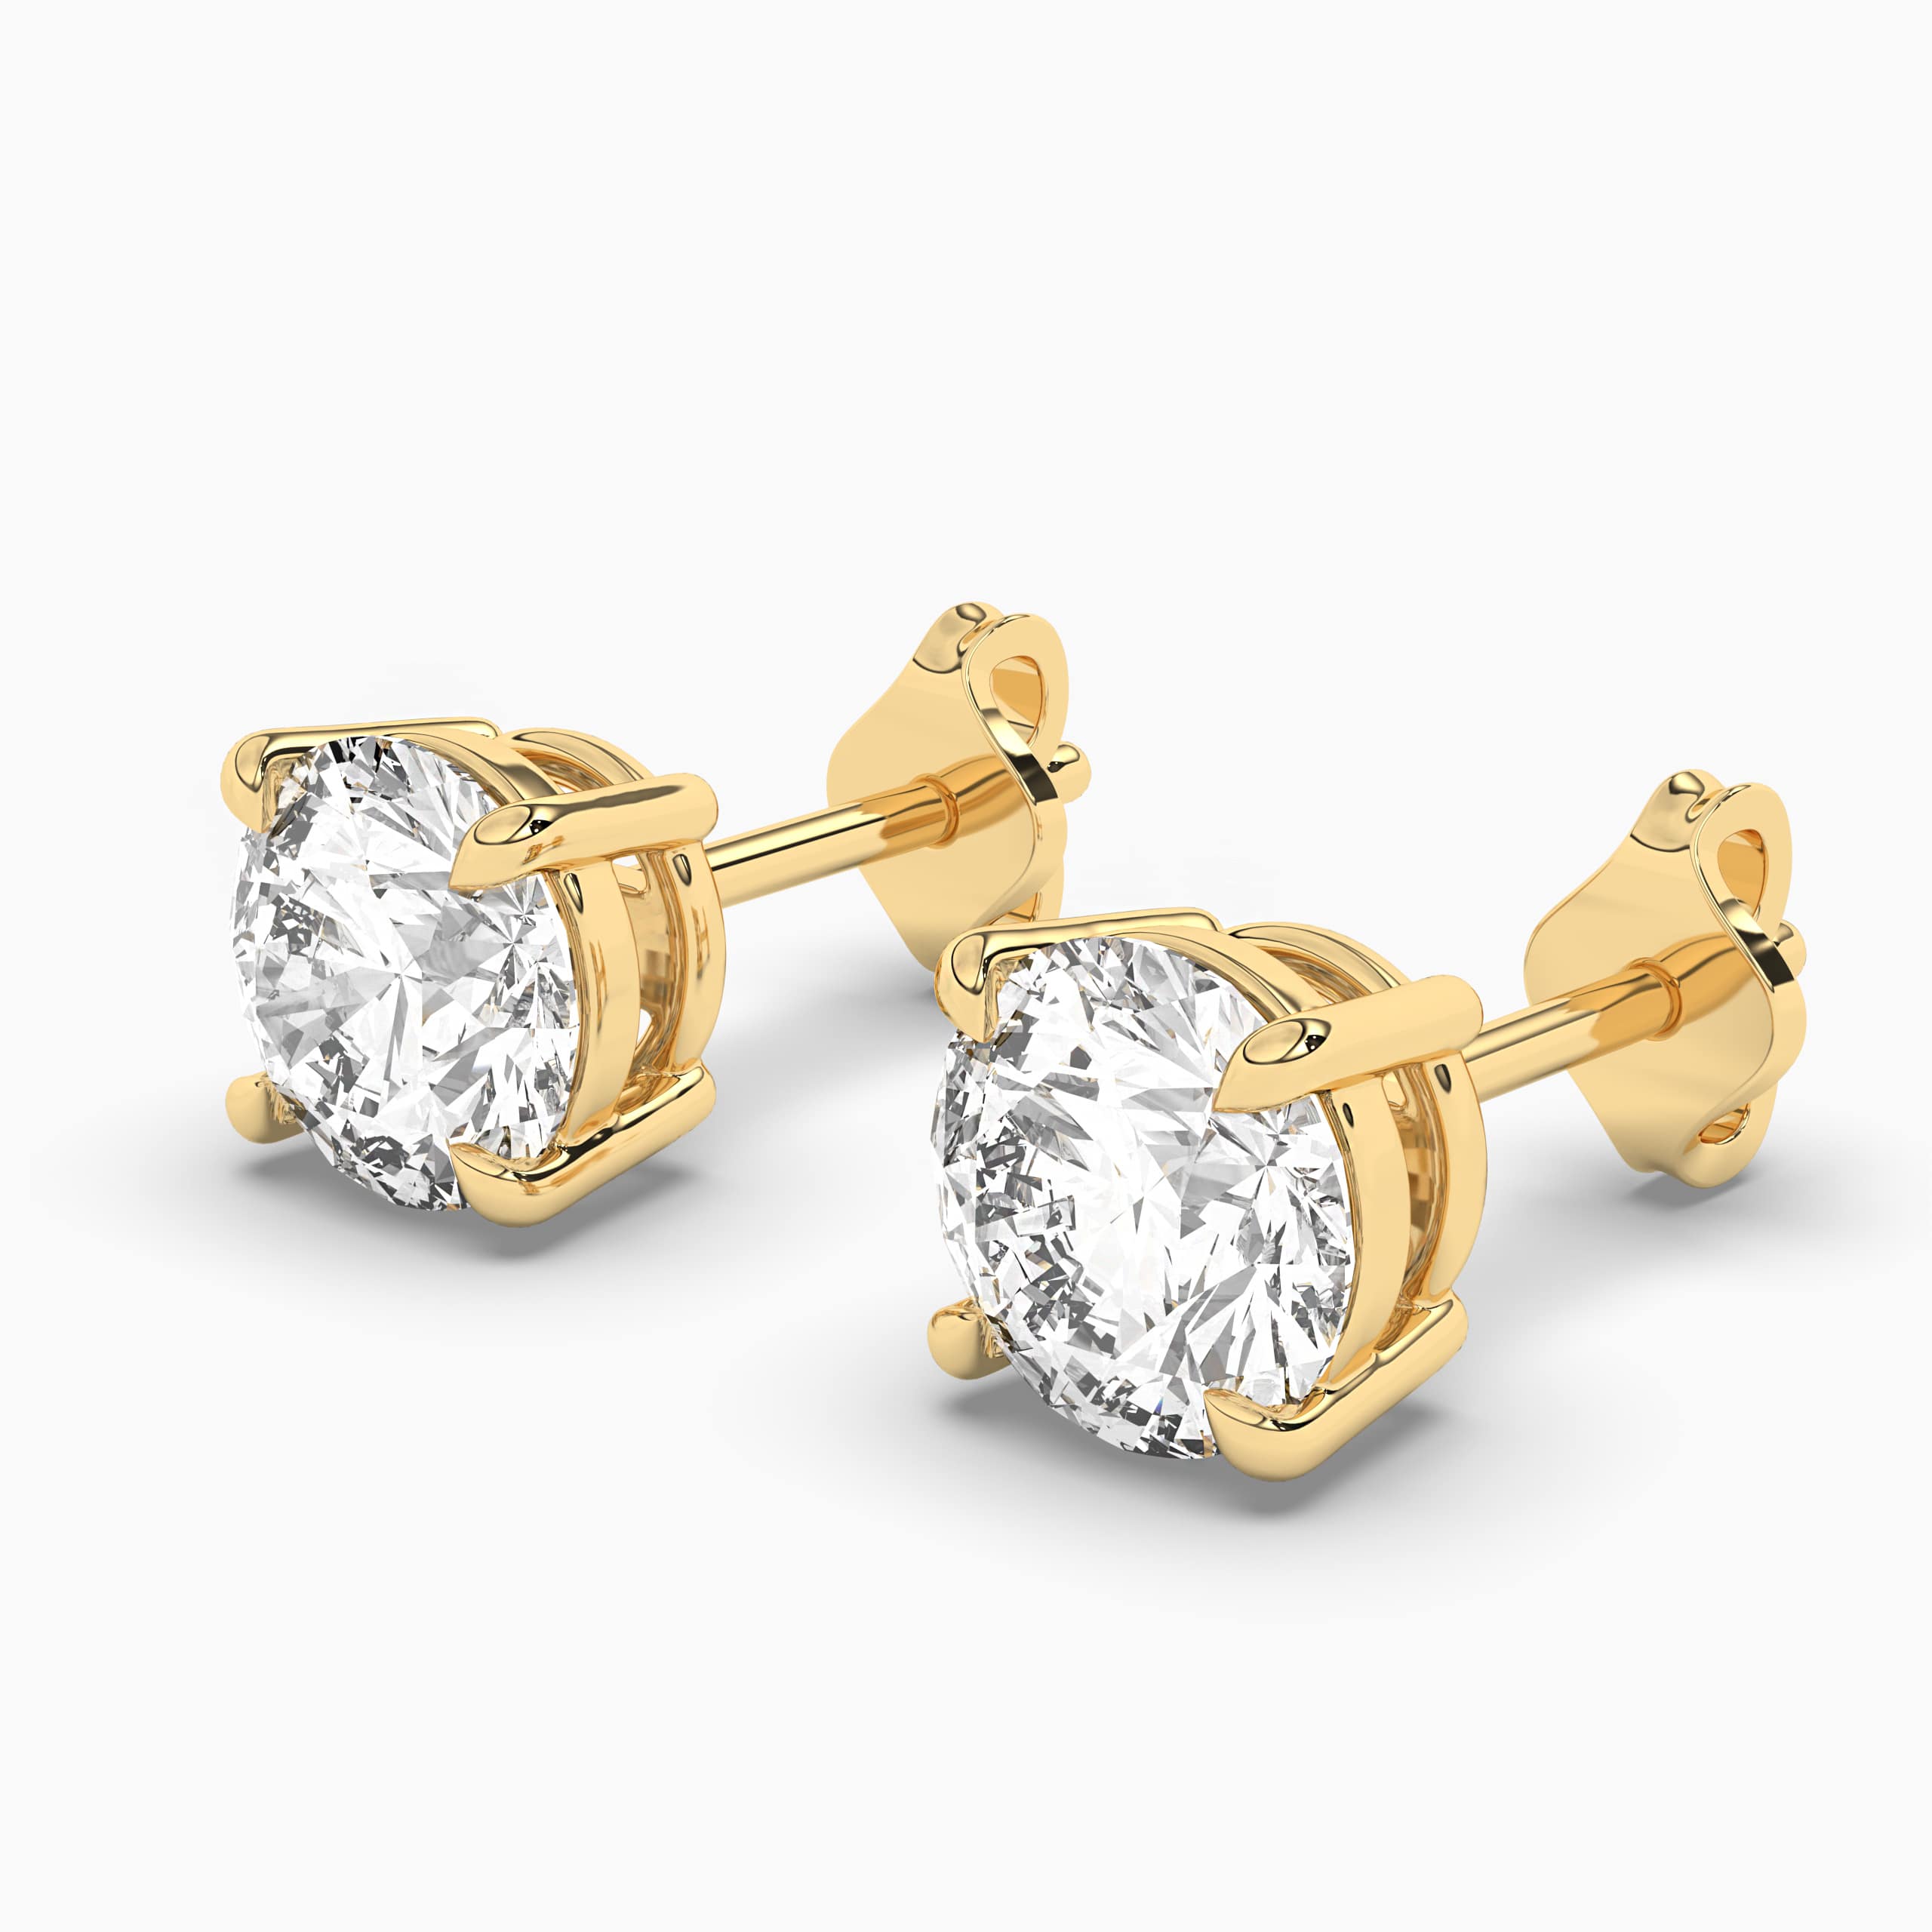 Round Cut Diamond Stud Earrings in Yellow Gold